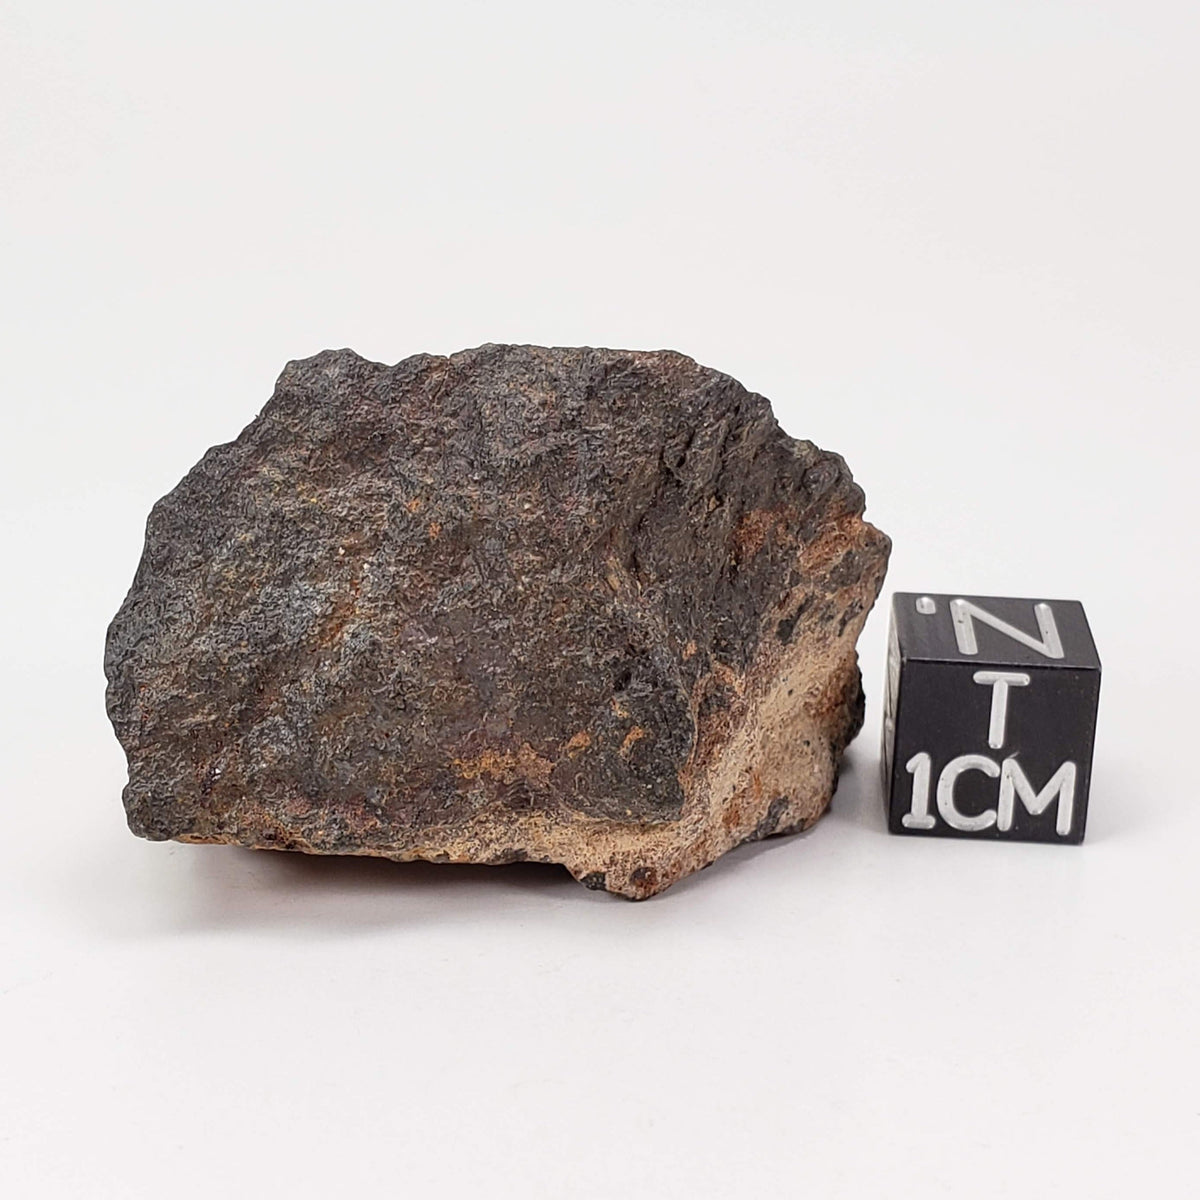 Ghubara Meteorite | 40.8 Gr | Individual | Rare Stony Black L5 Chondrite